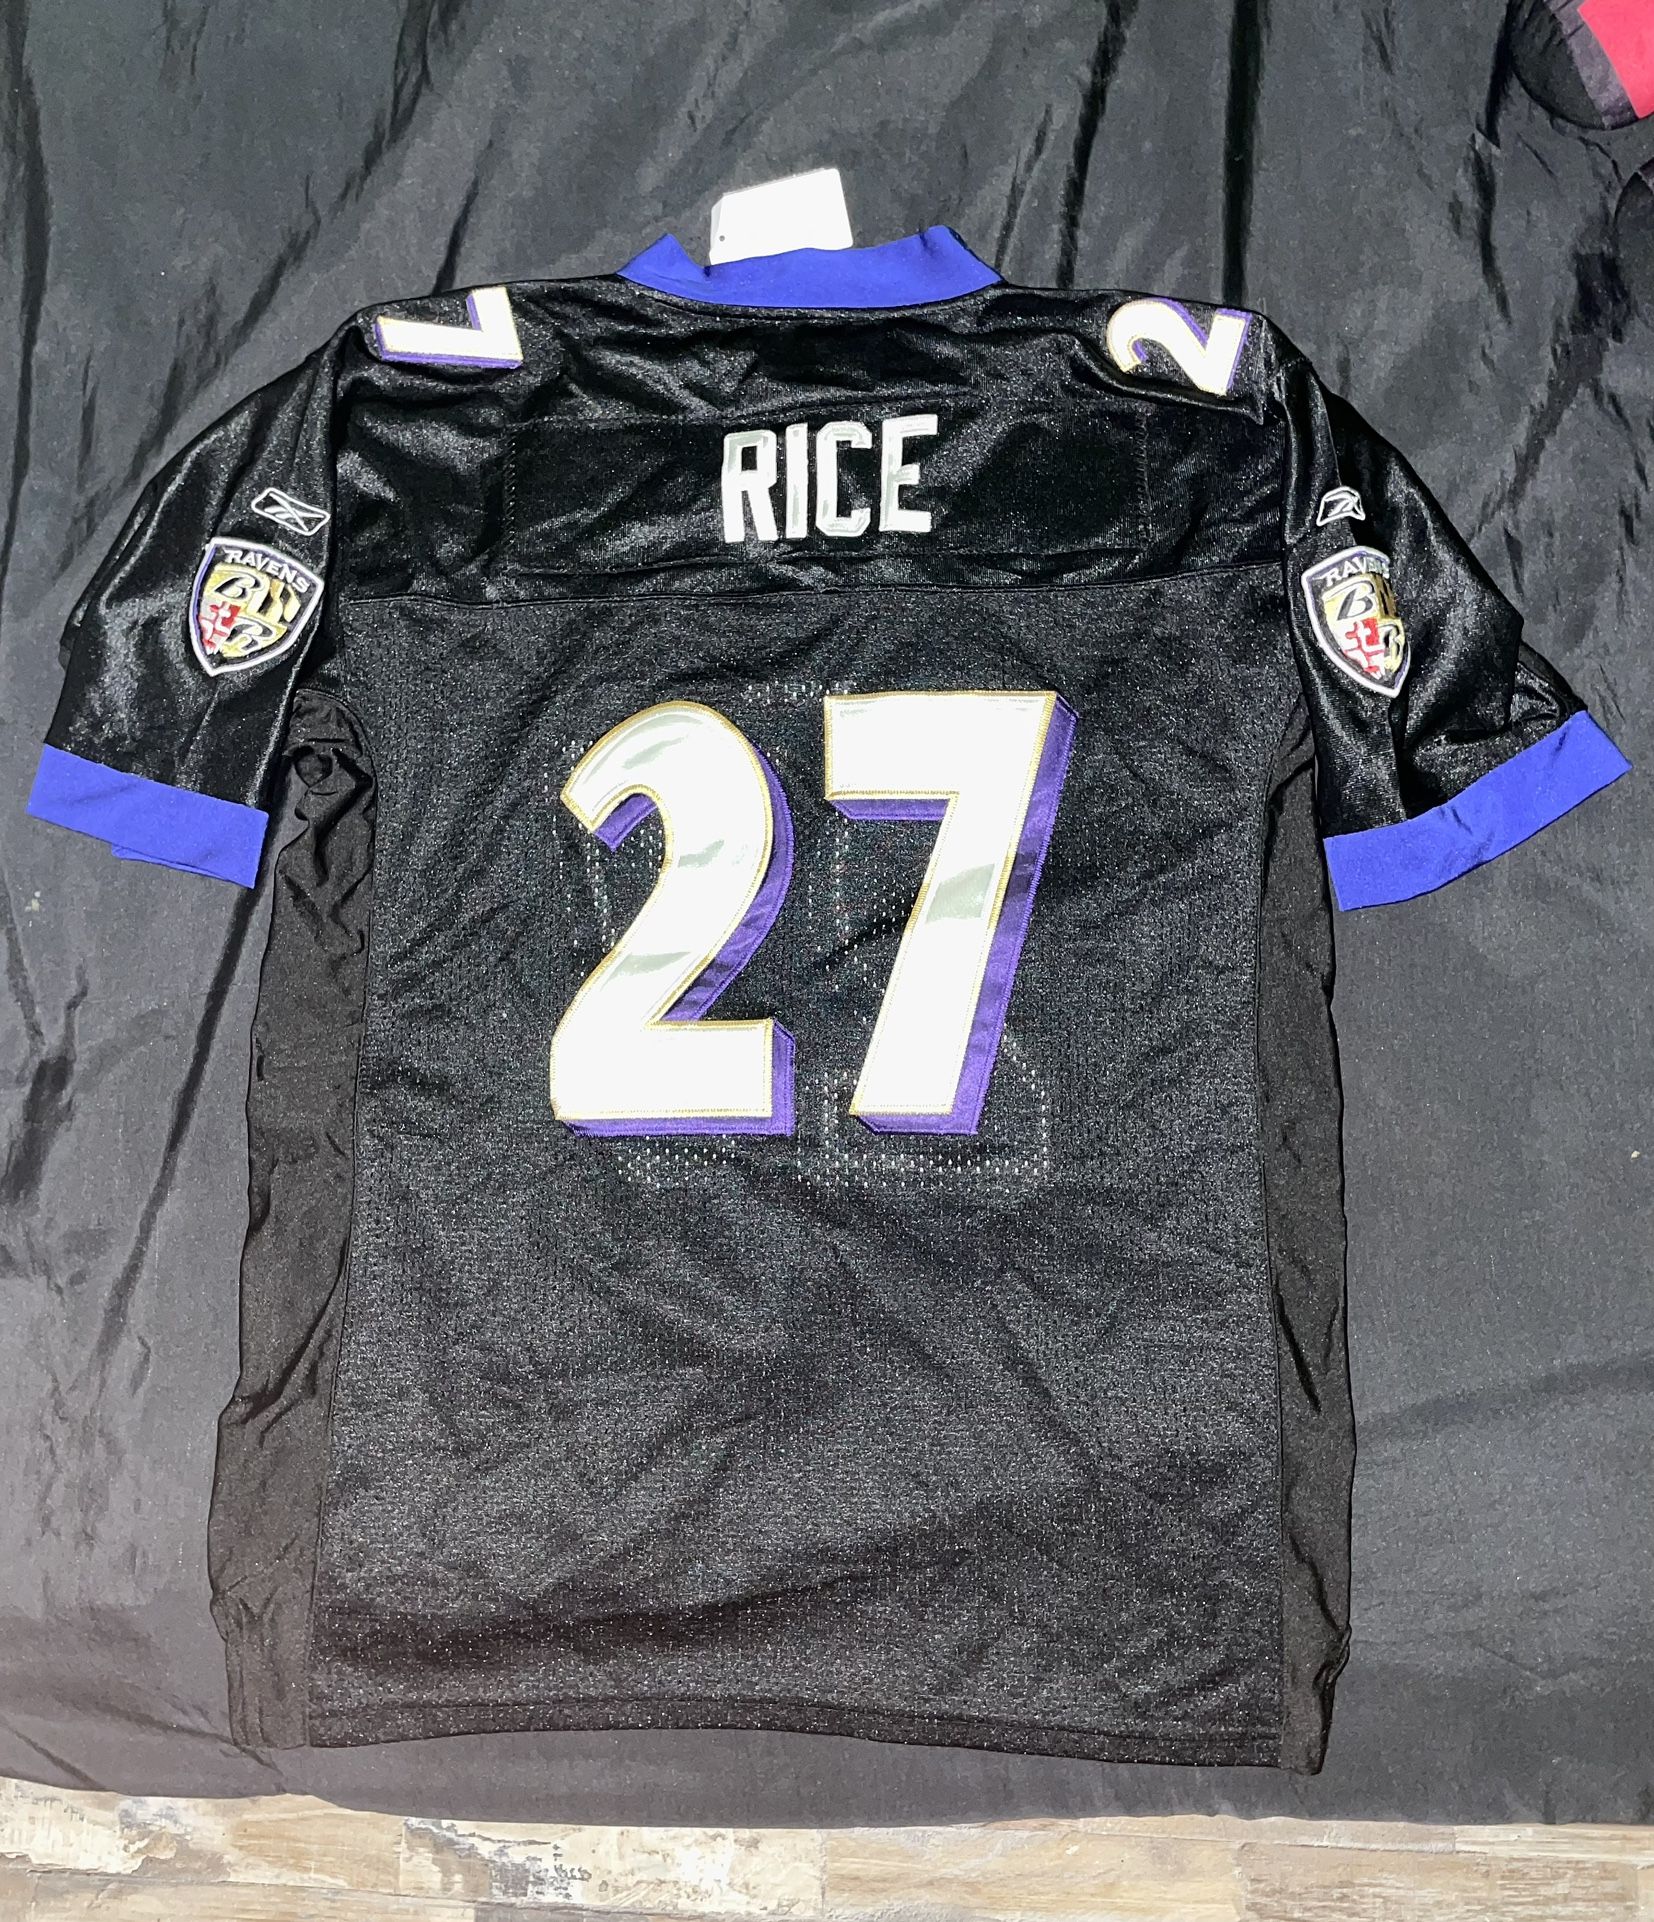 Reebok NFL Ravens (Rice 27)